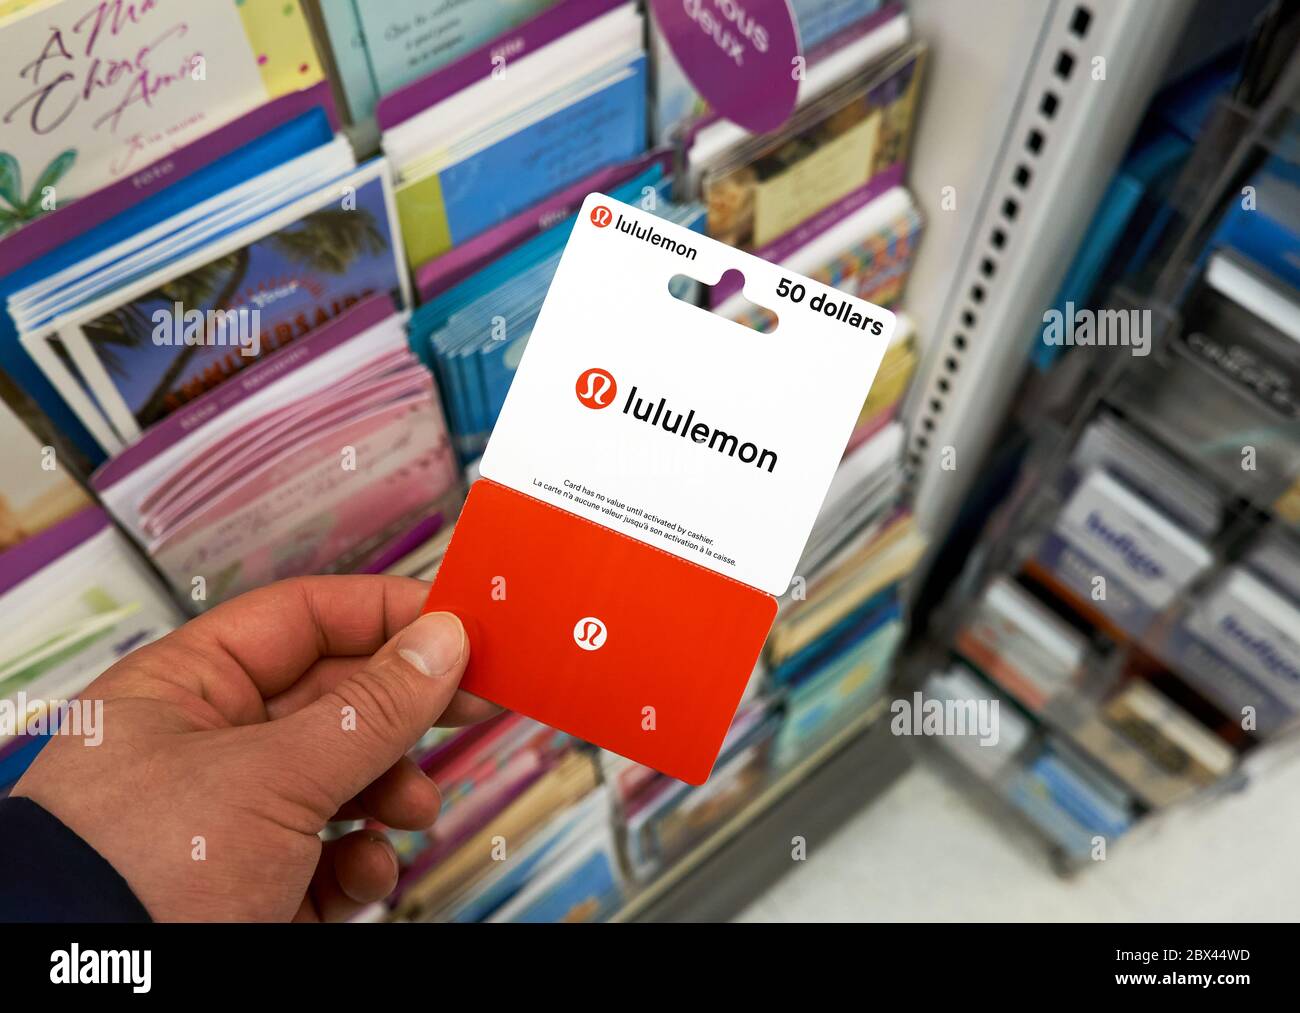 where to buy lululemon gift cards